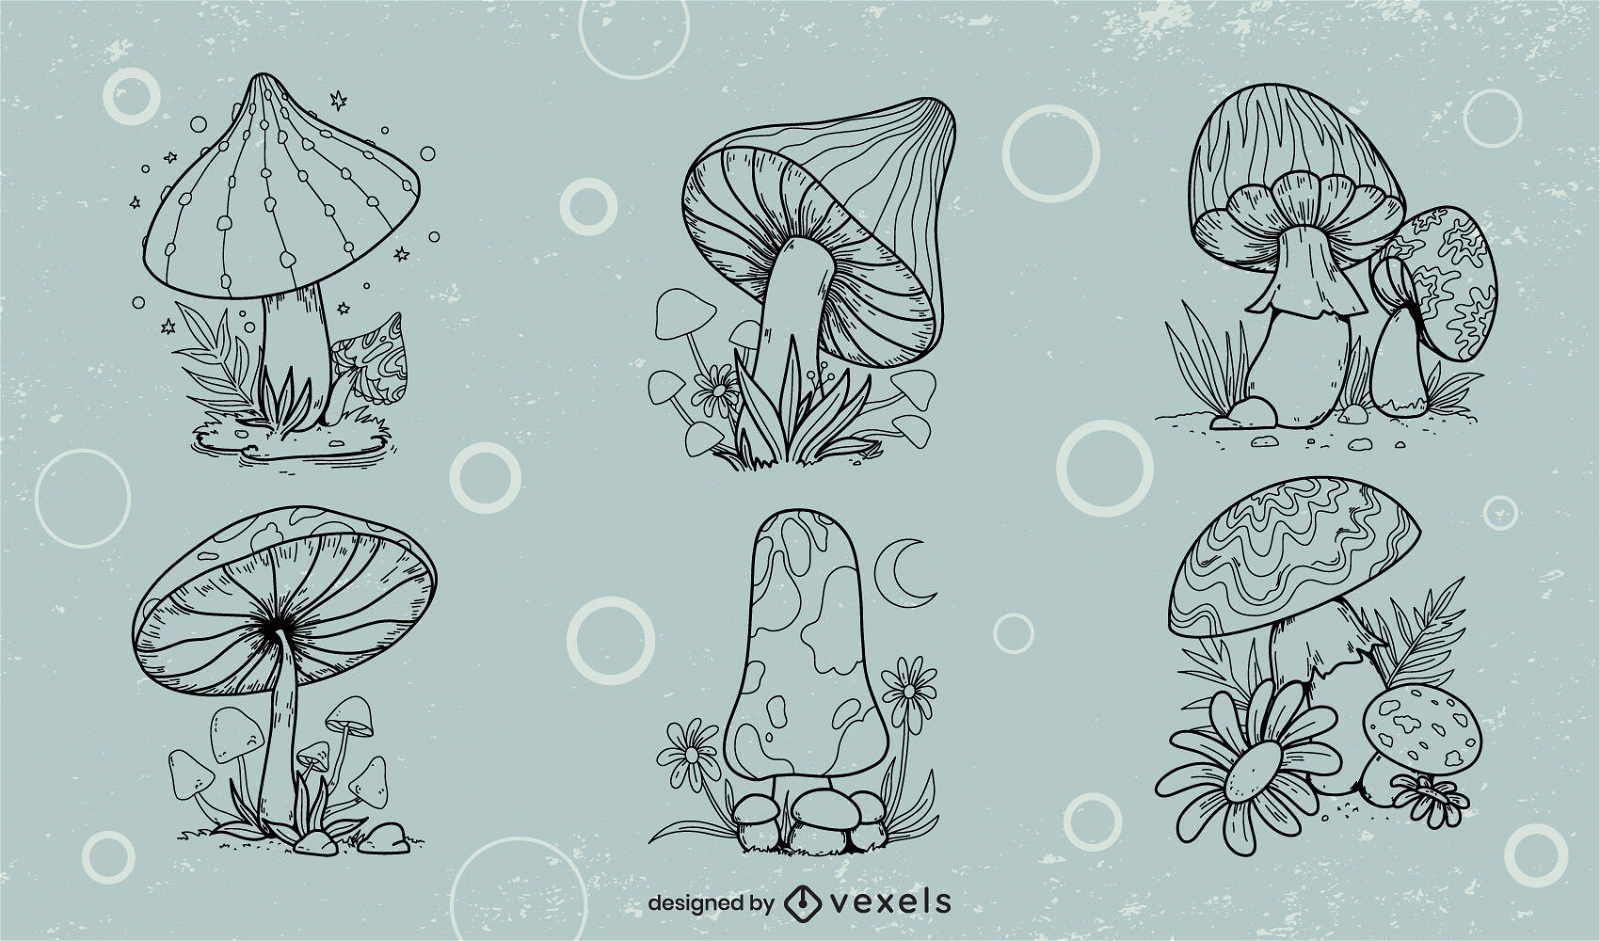 Mushrooms in nature line art style